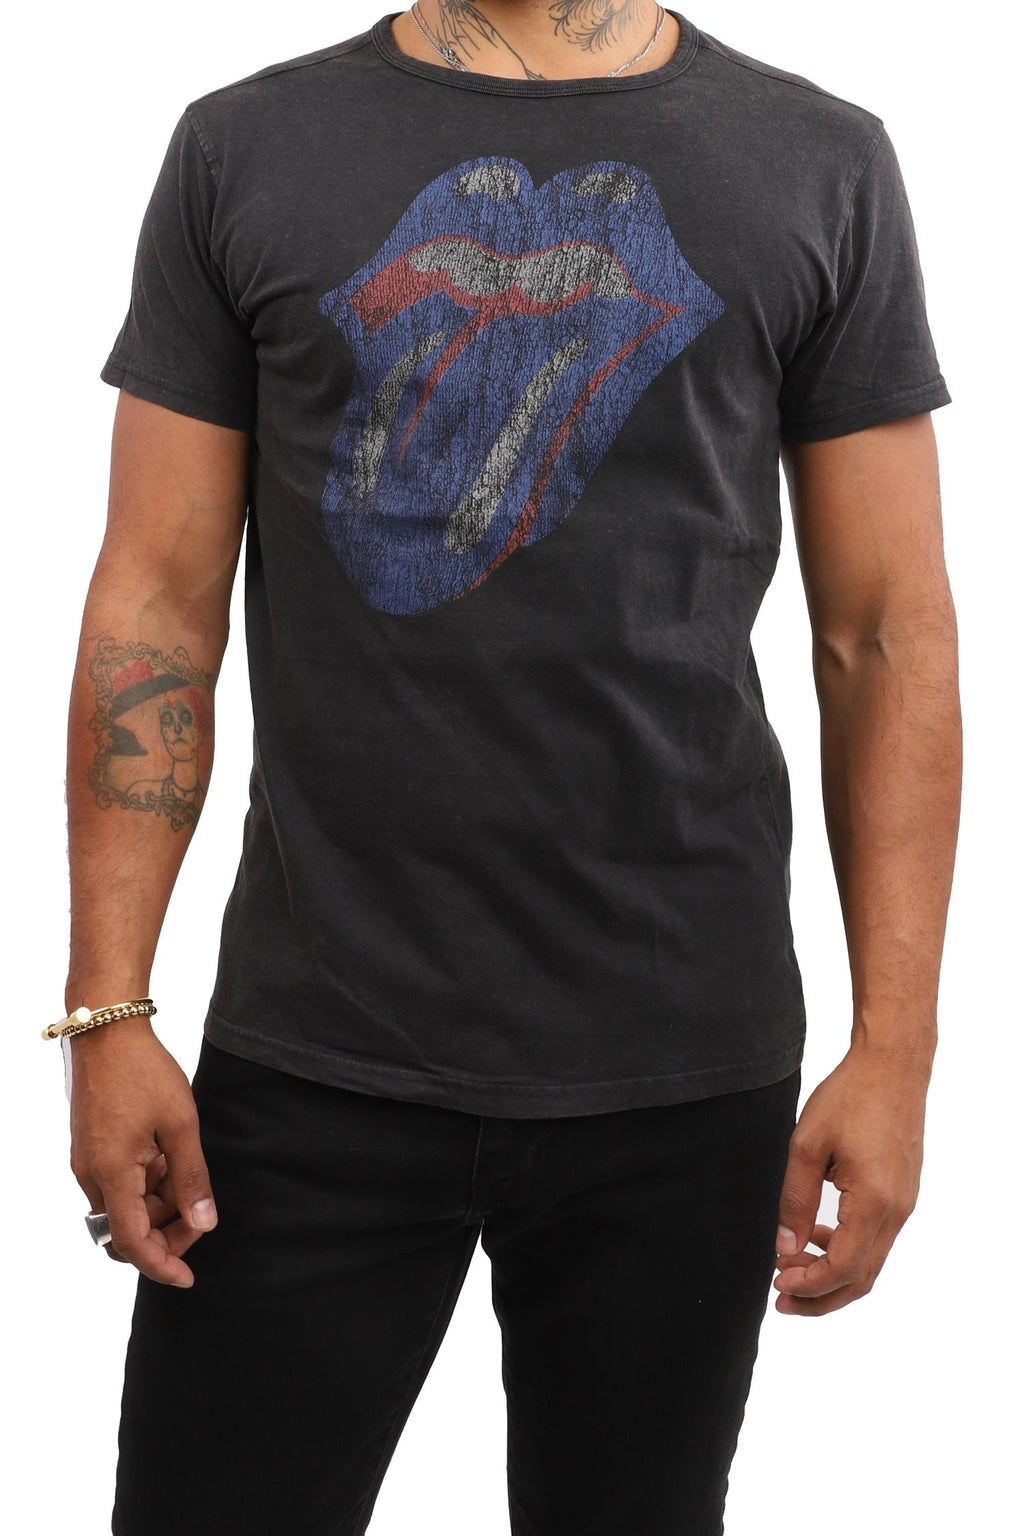 Rolling Stones Angeles Tongue Logo Black – Los - Candy T-Shirt \'78 Eye Tour 